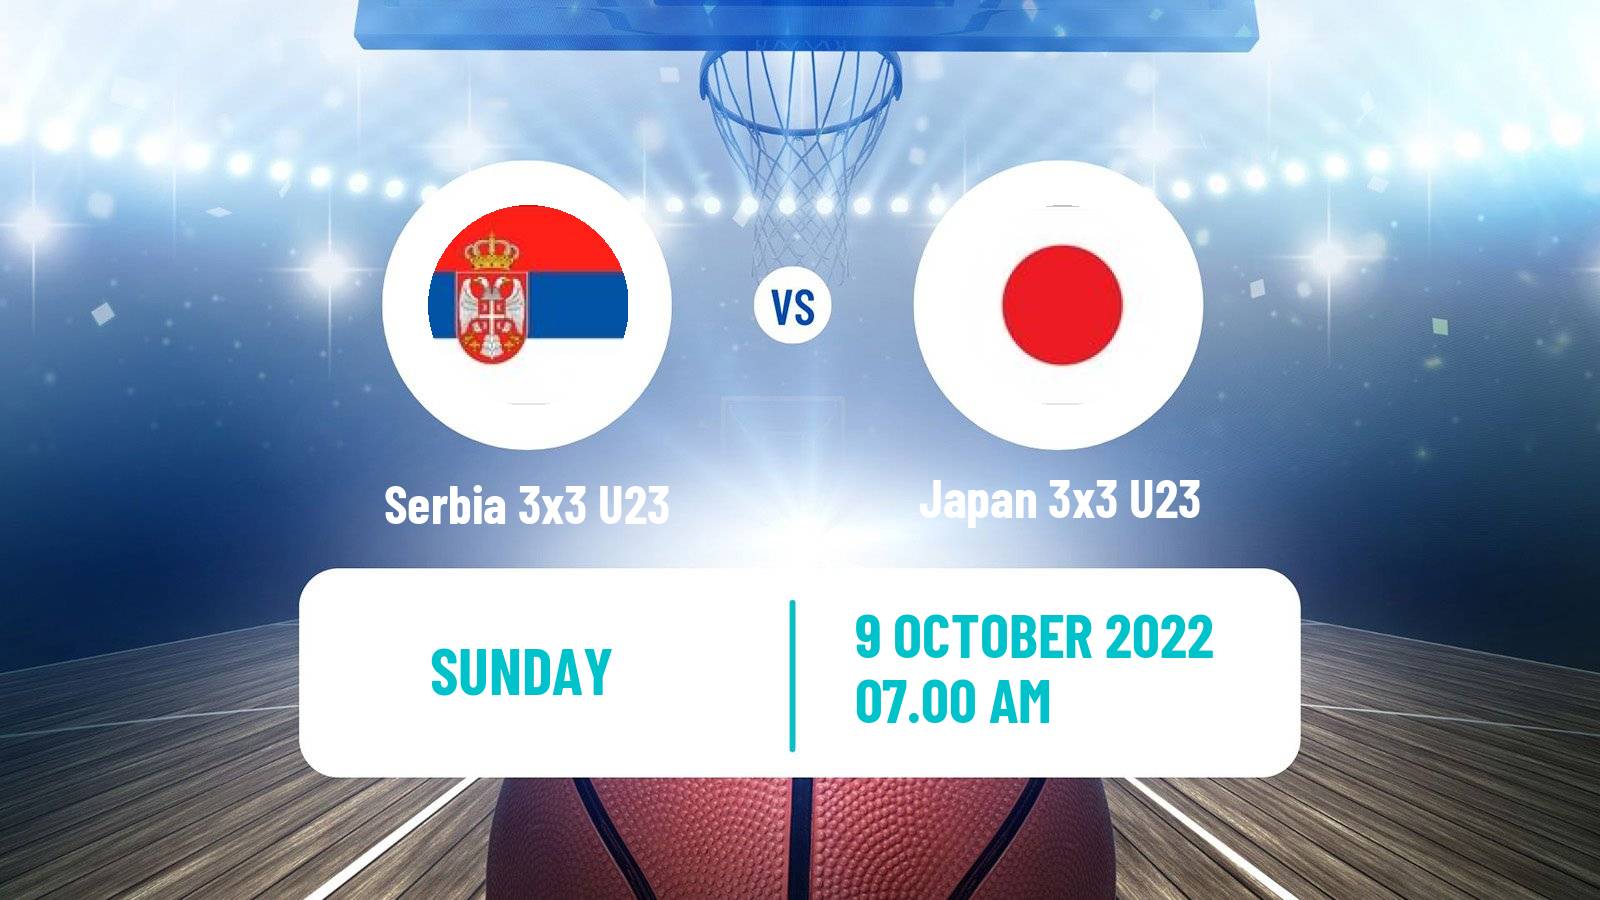 Basketball World Cup Basketball 3x3 U23 Serbia 3x3 U23 - Japan 3x3 U23